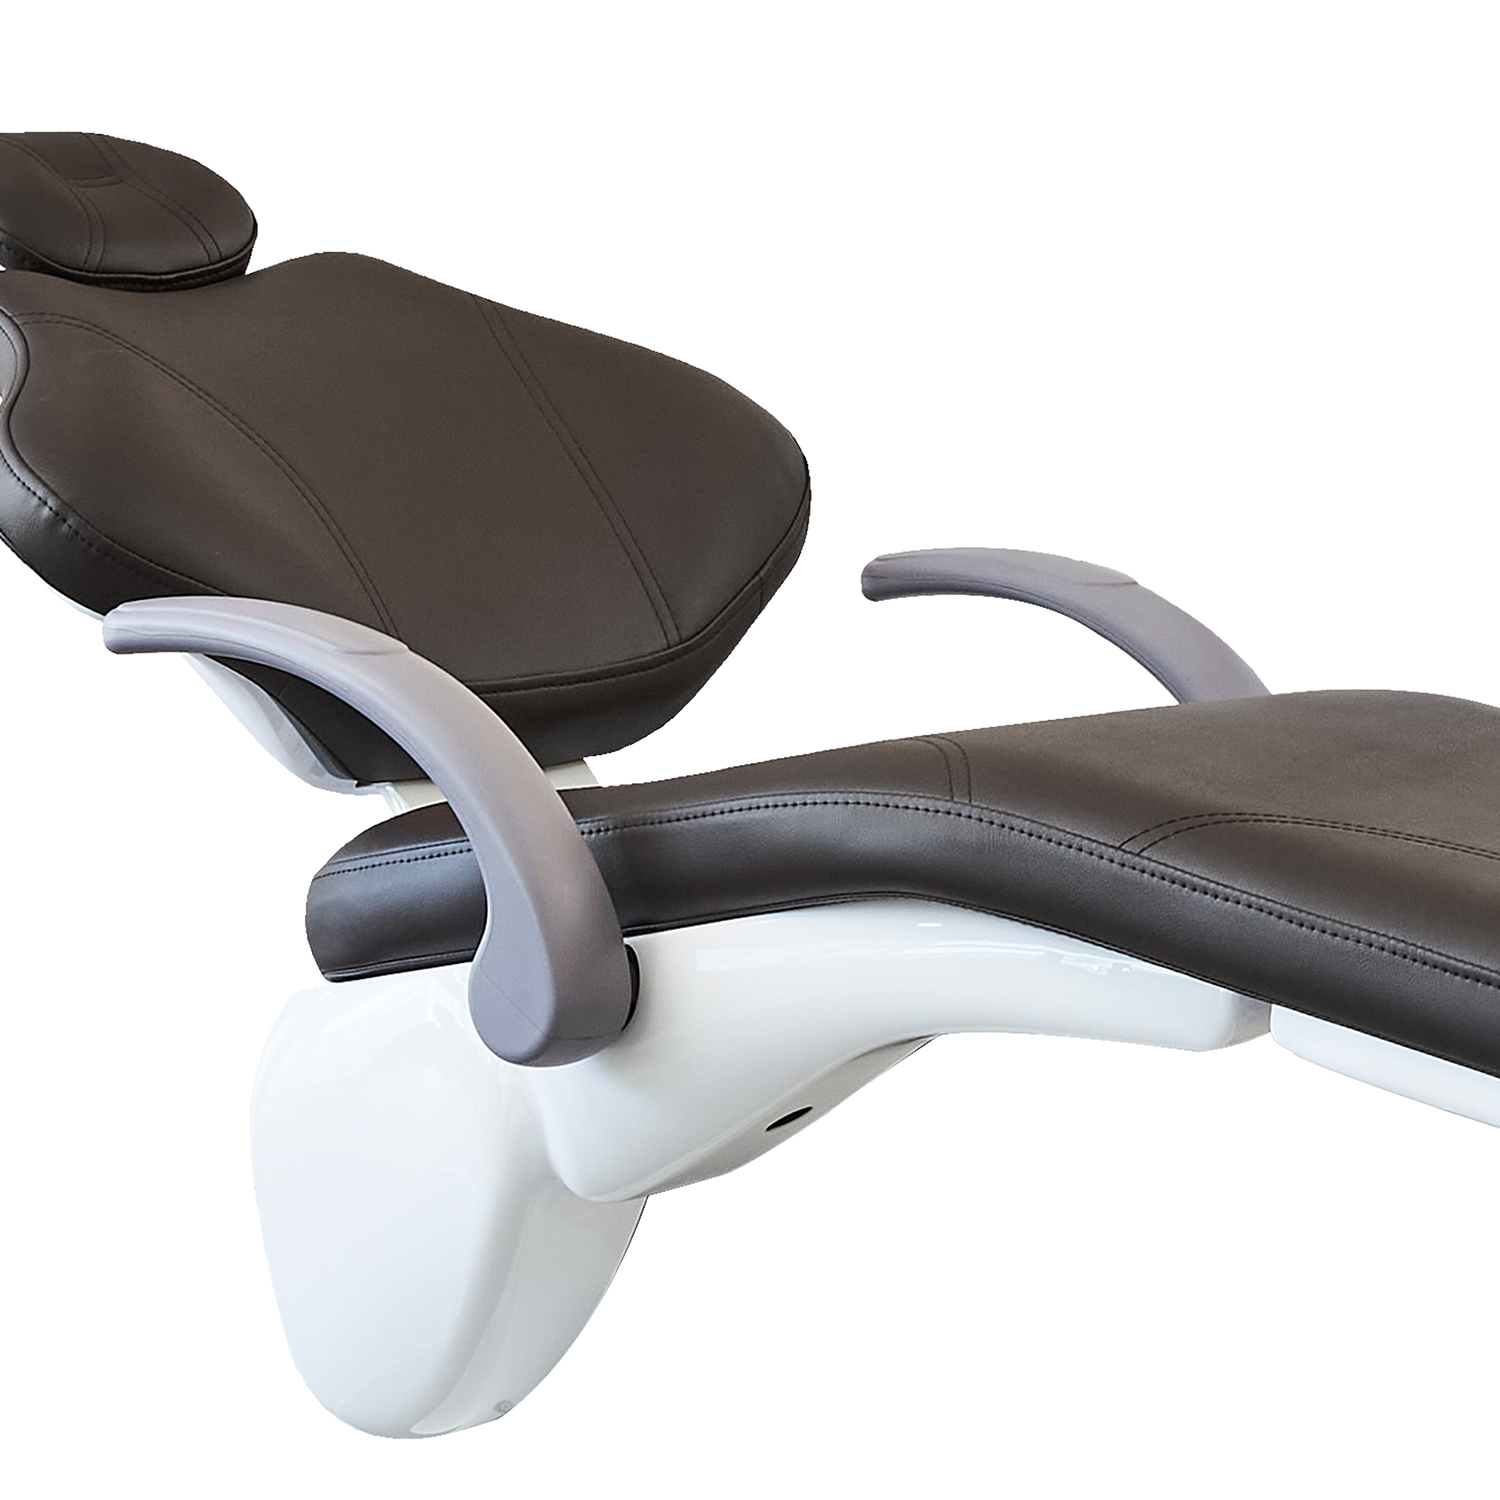 Ergonomically designed dental chairs